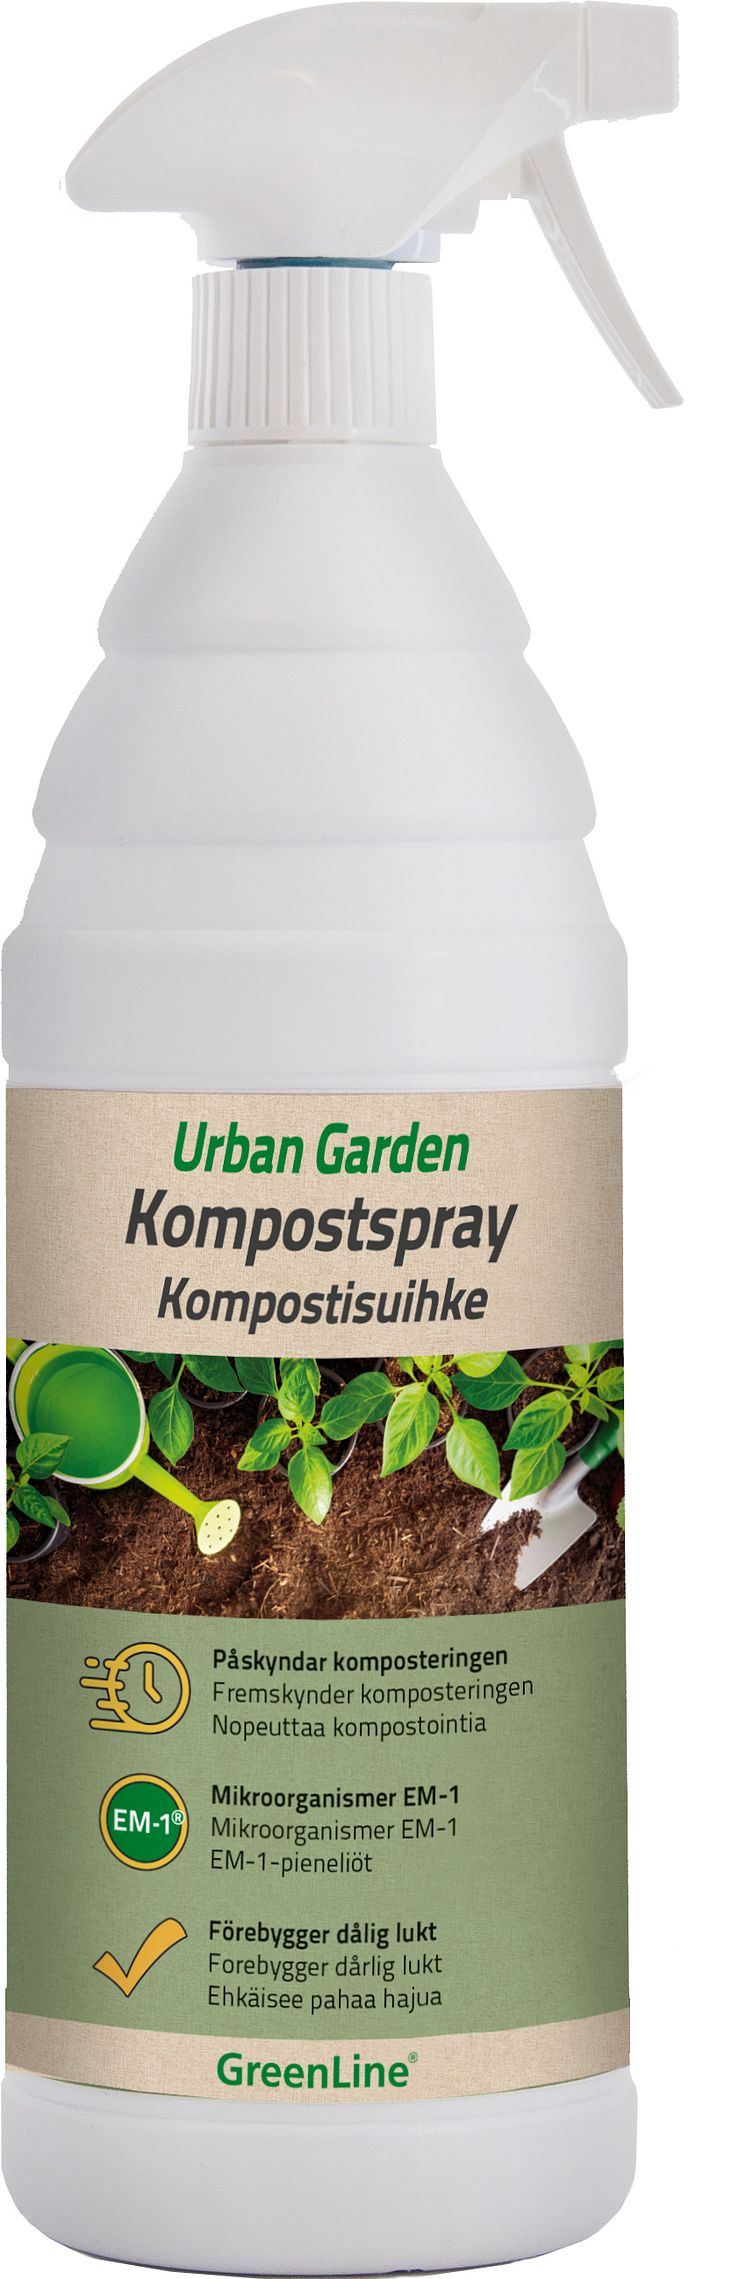 71441_Urban Garden Kompostspray.jpg